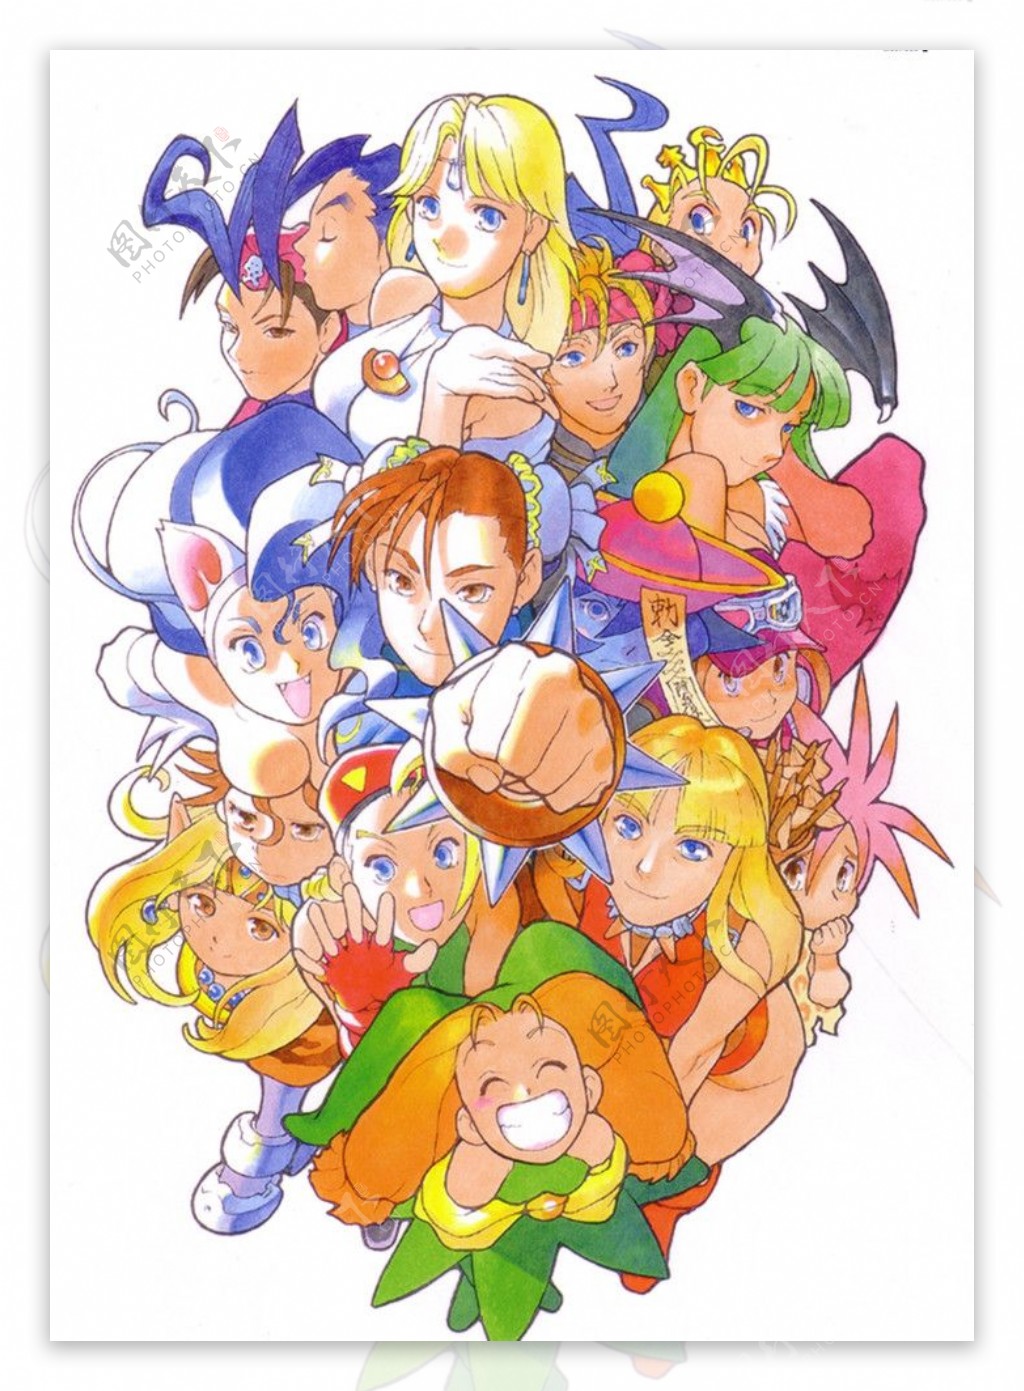 Capcom公司全女性角色插画图片